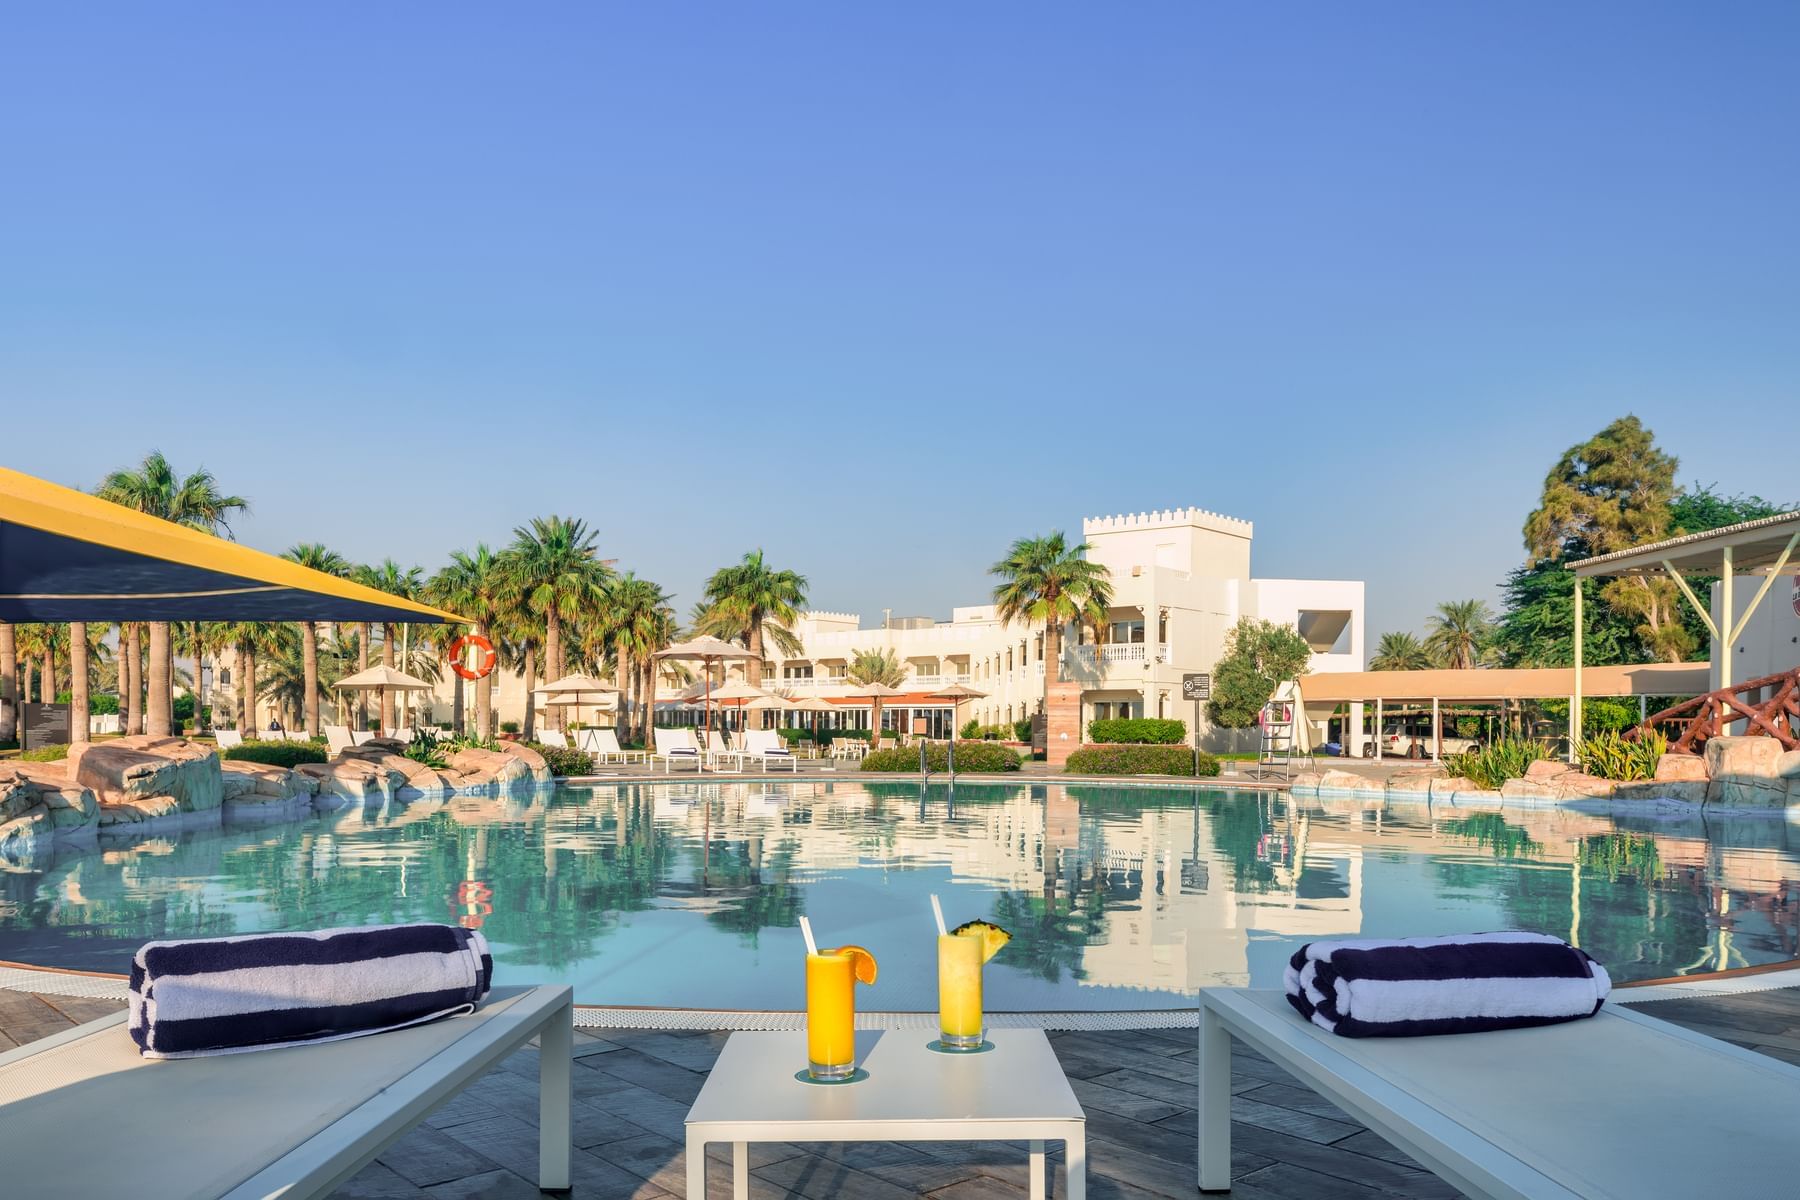 Experience Luxury and Comfort at Sealine Beach, A Murwab Resort in Qatar